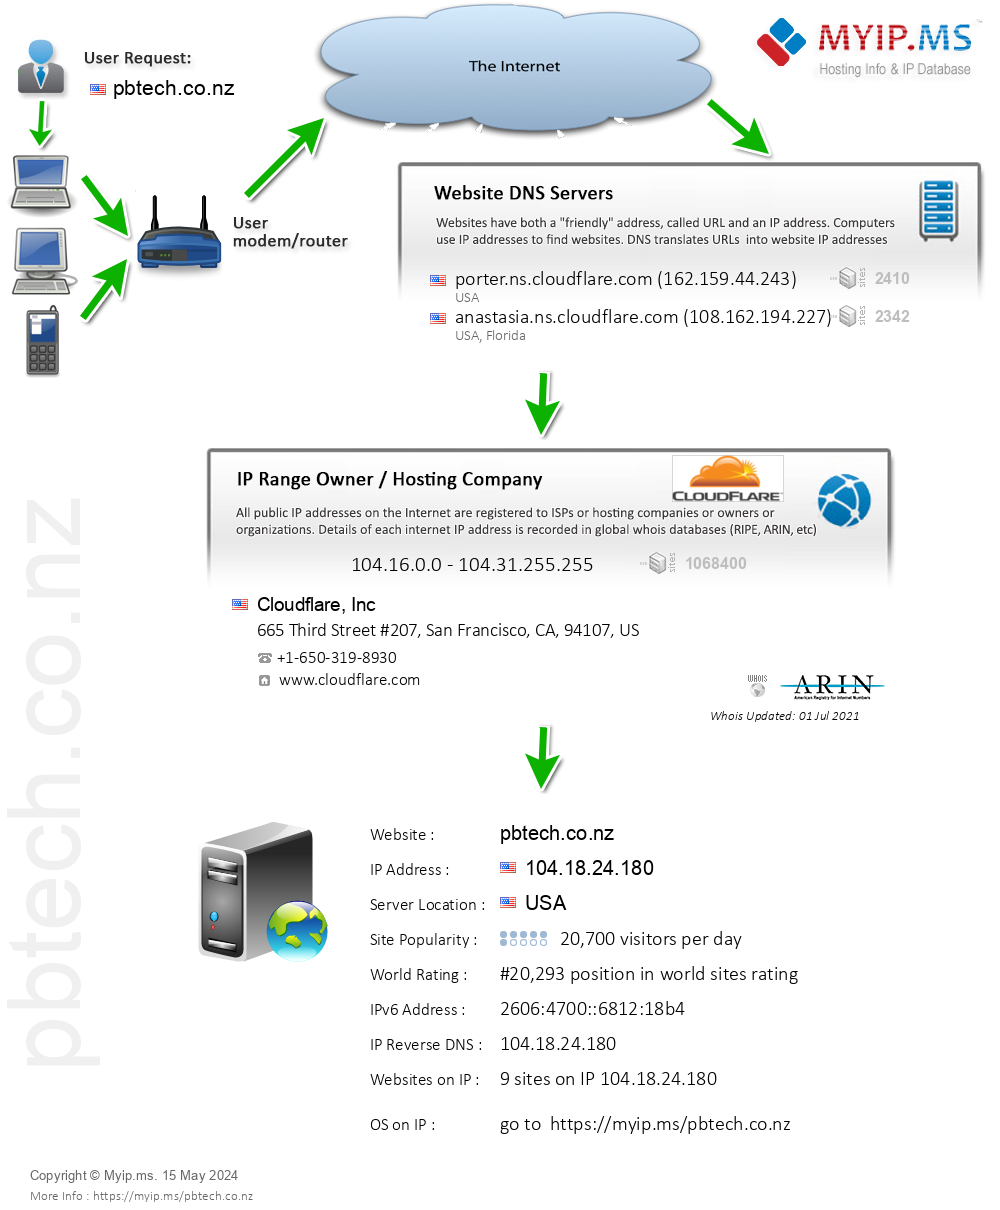 Pbtech.co.nz - Website Hosting Visual IP Diagram